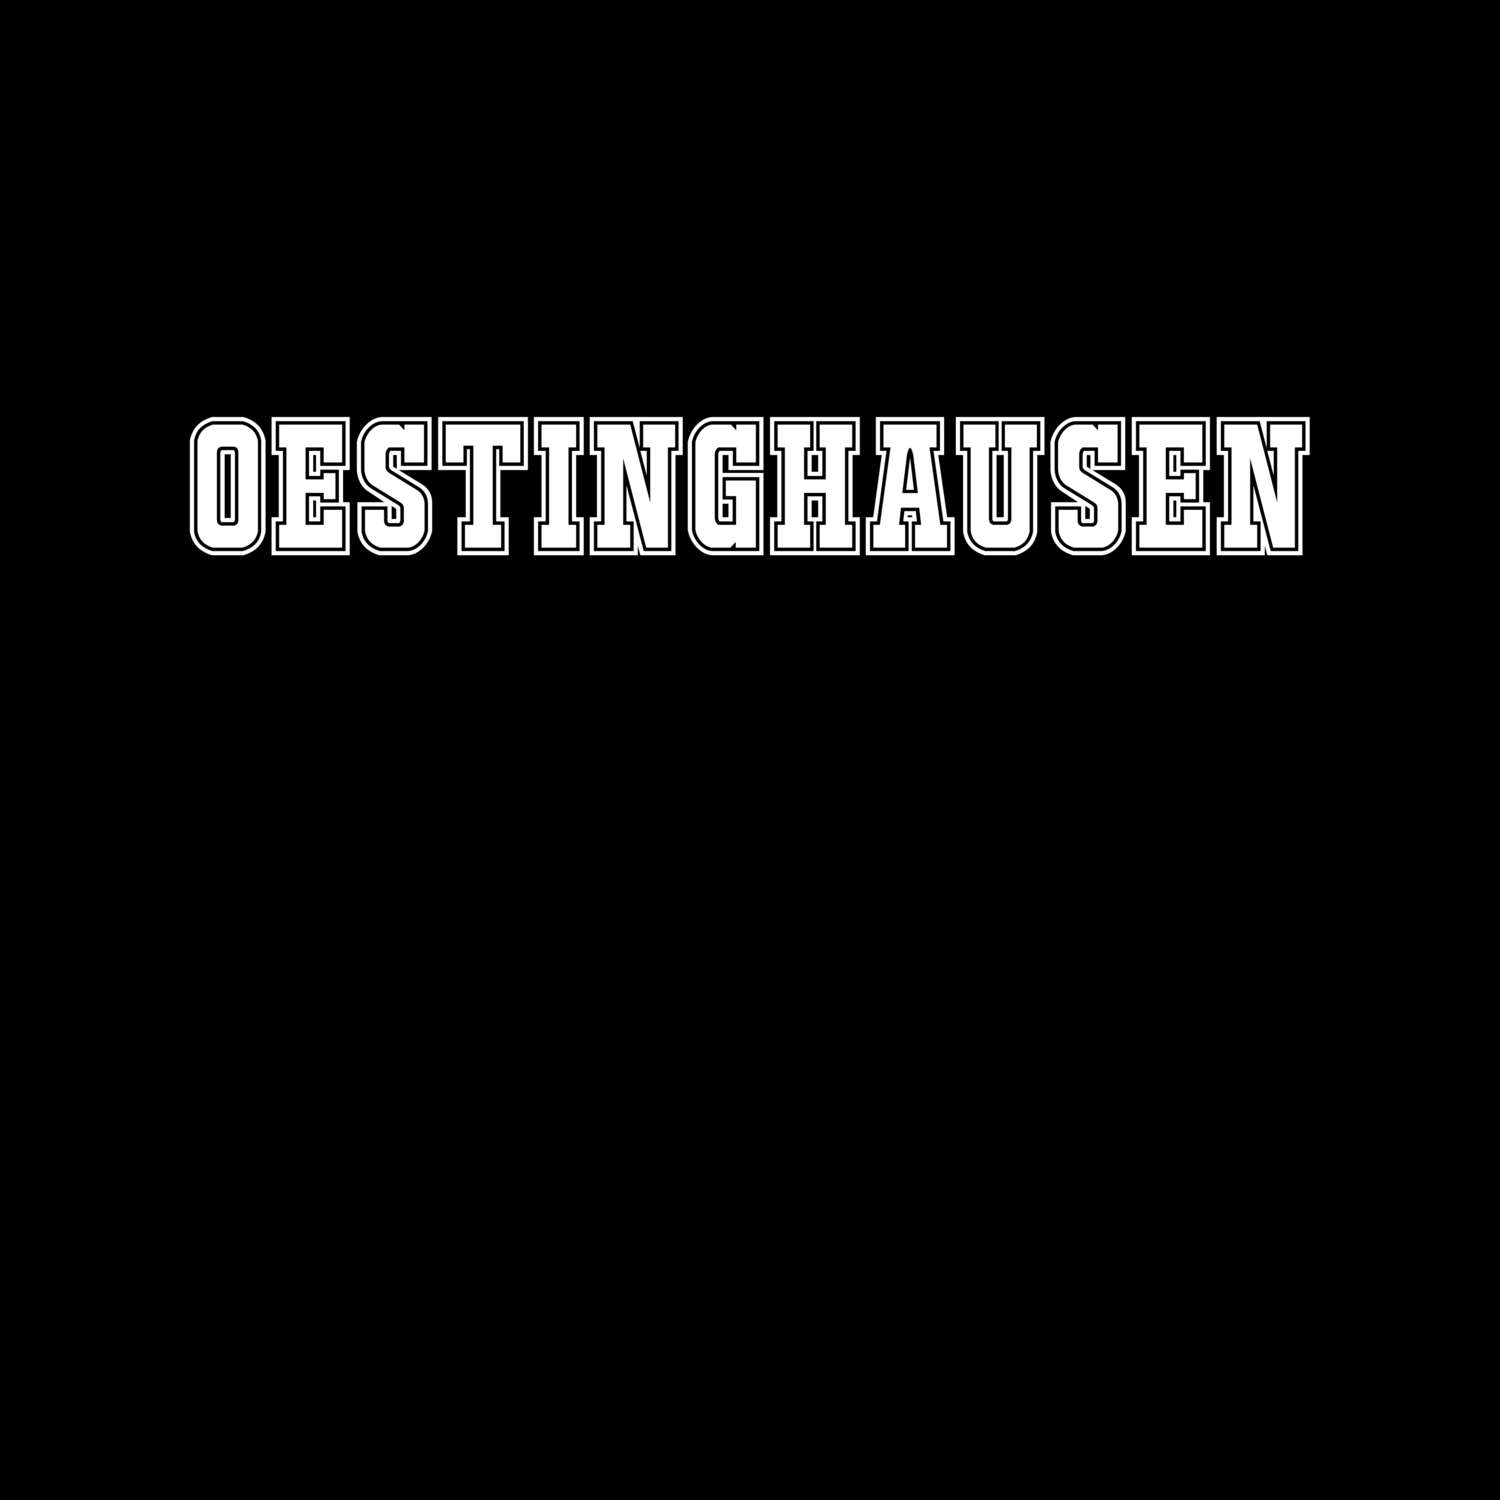 Oestinghausen T-Shirt »Classic«